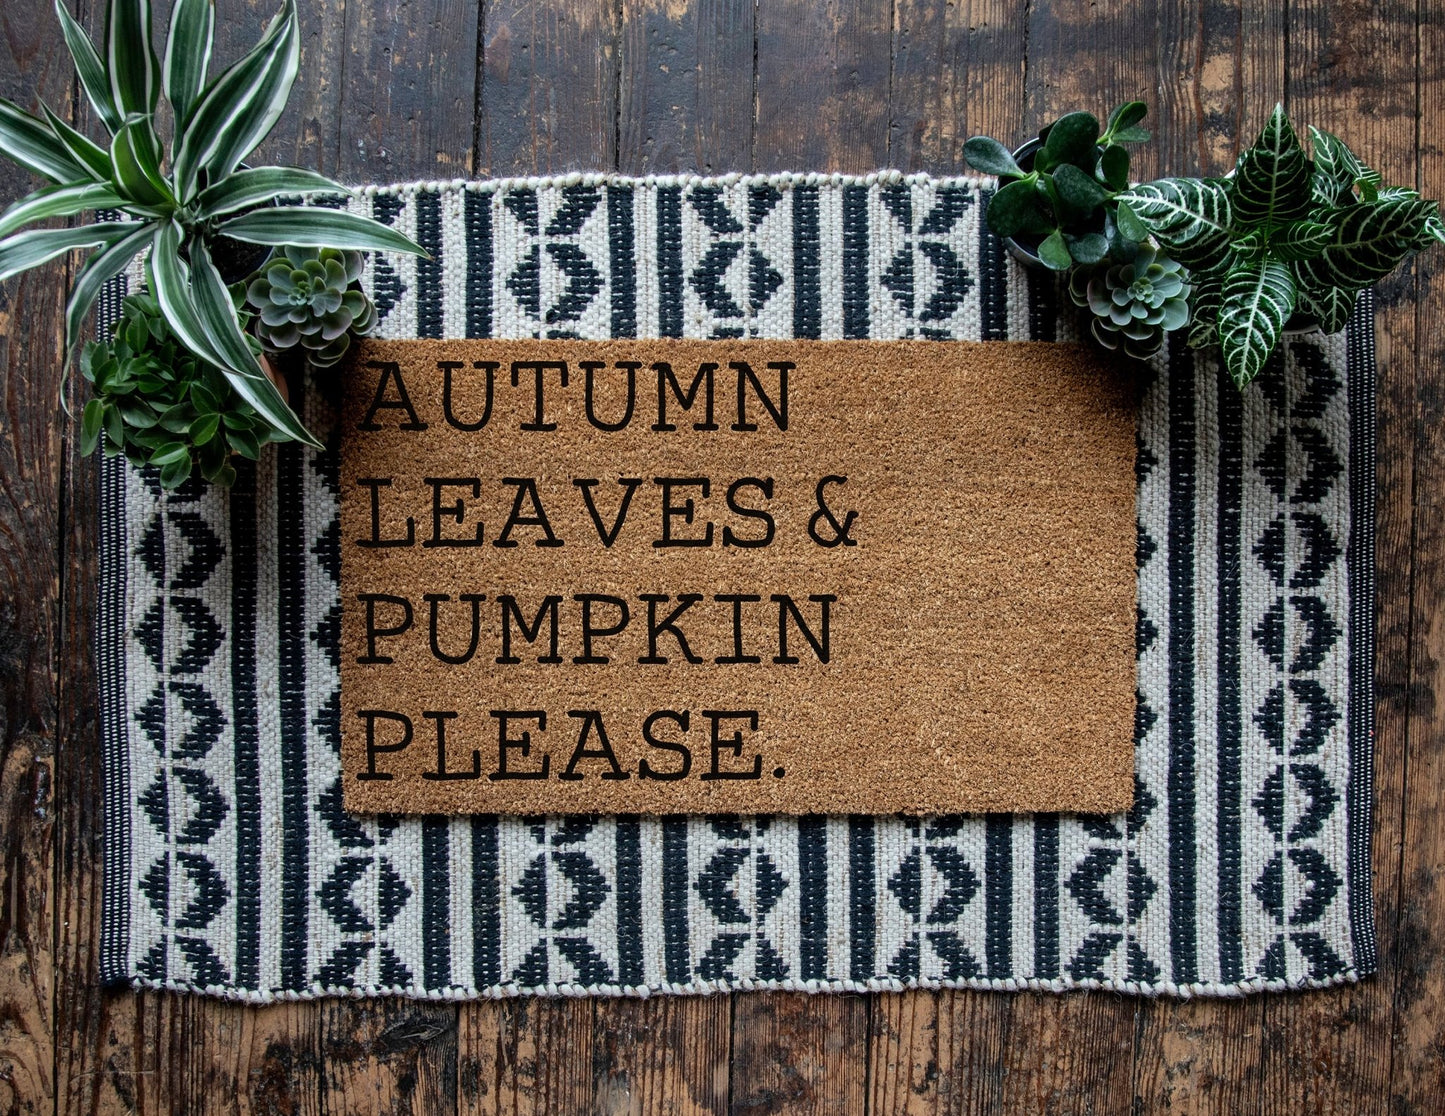 Autumn Leaves and Pumpkin Please Doormat